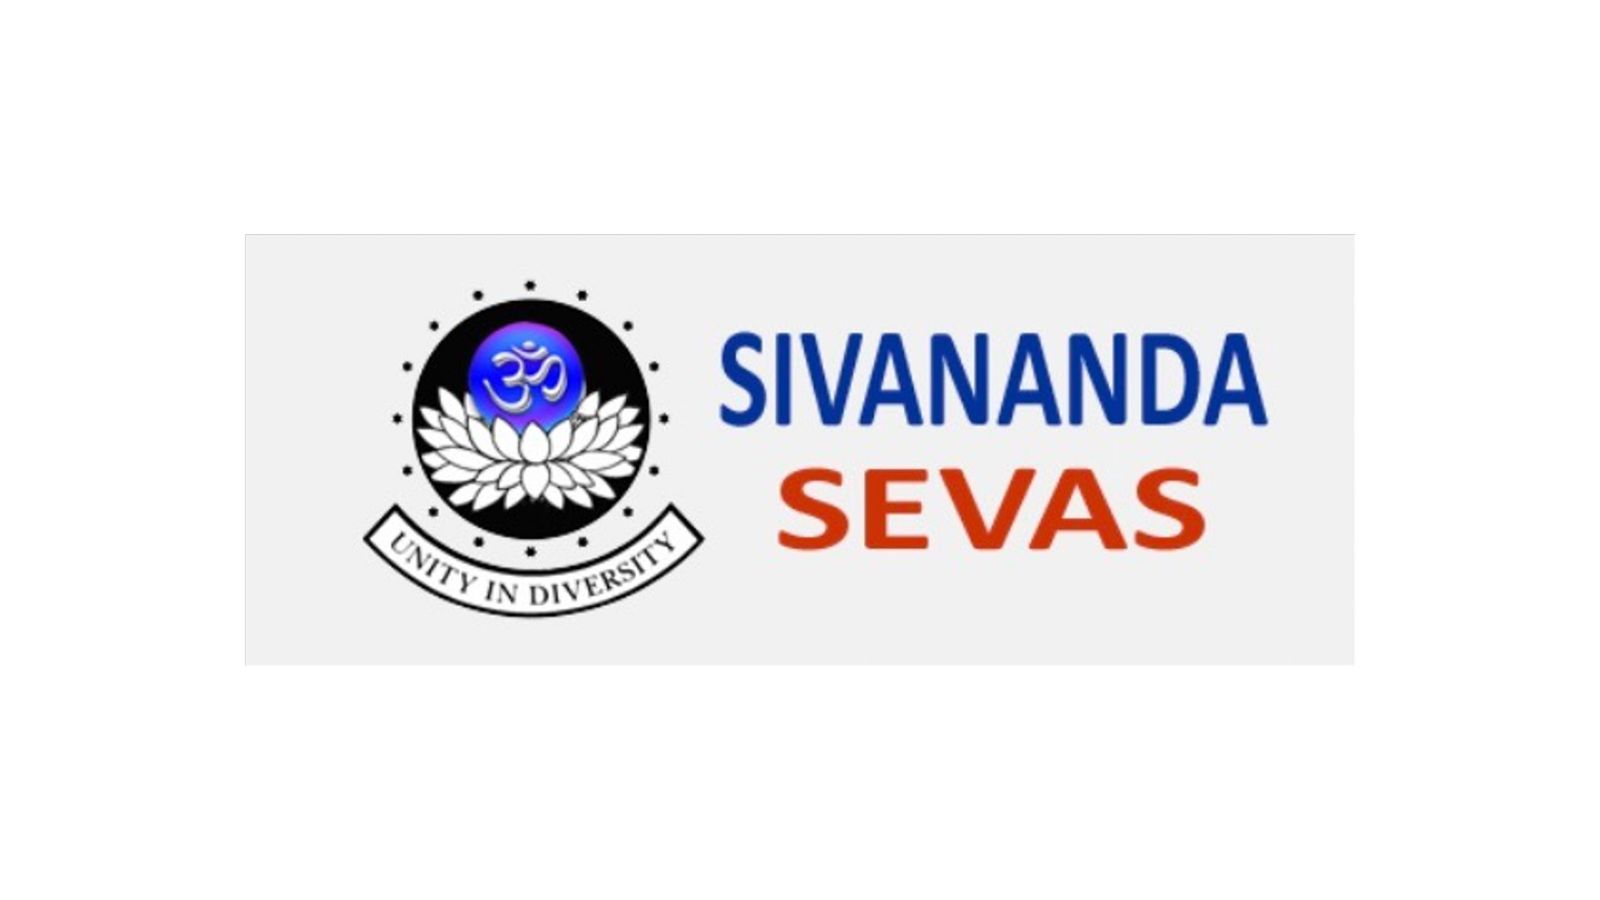 Sivananda Sevas Yoga logo with the words unity in diversity